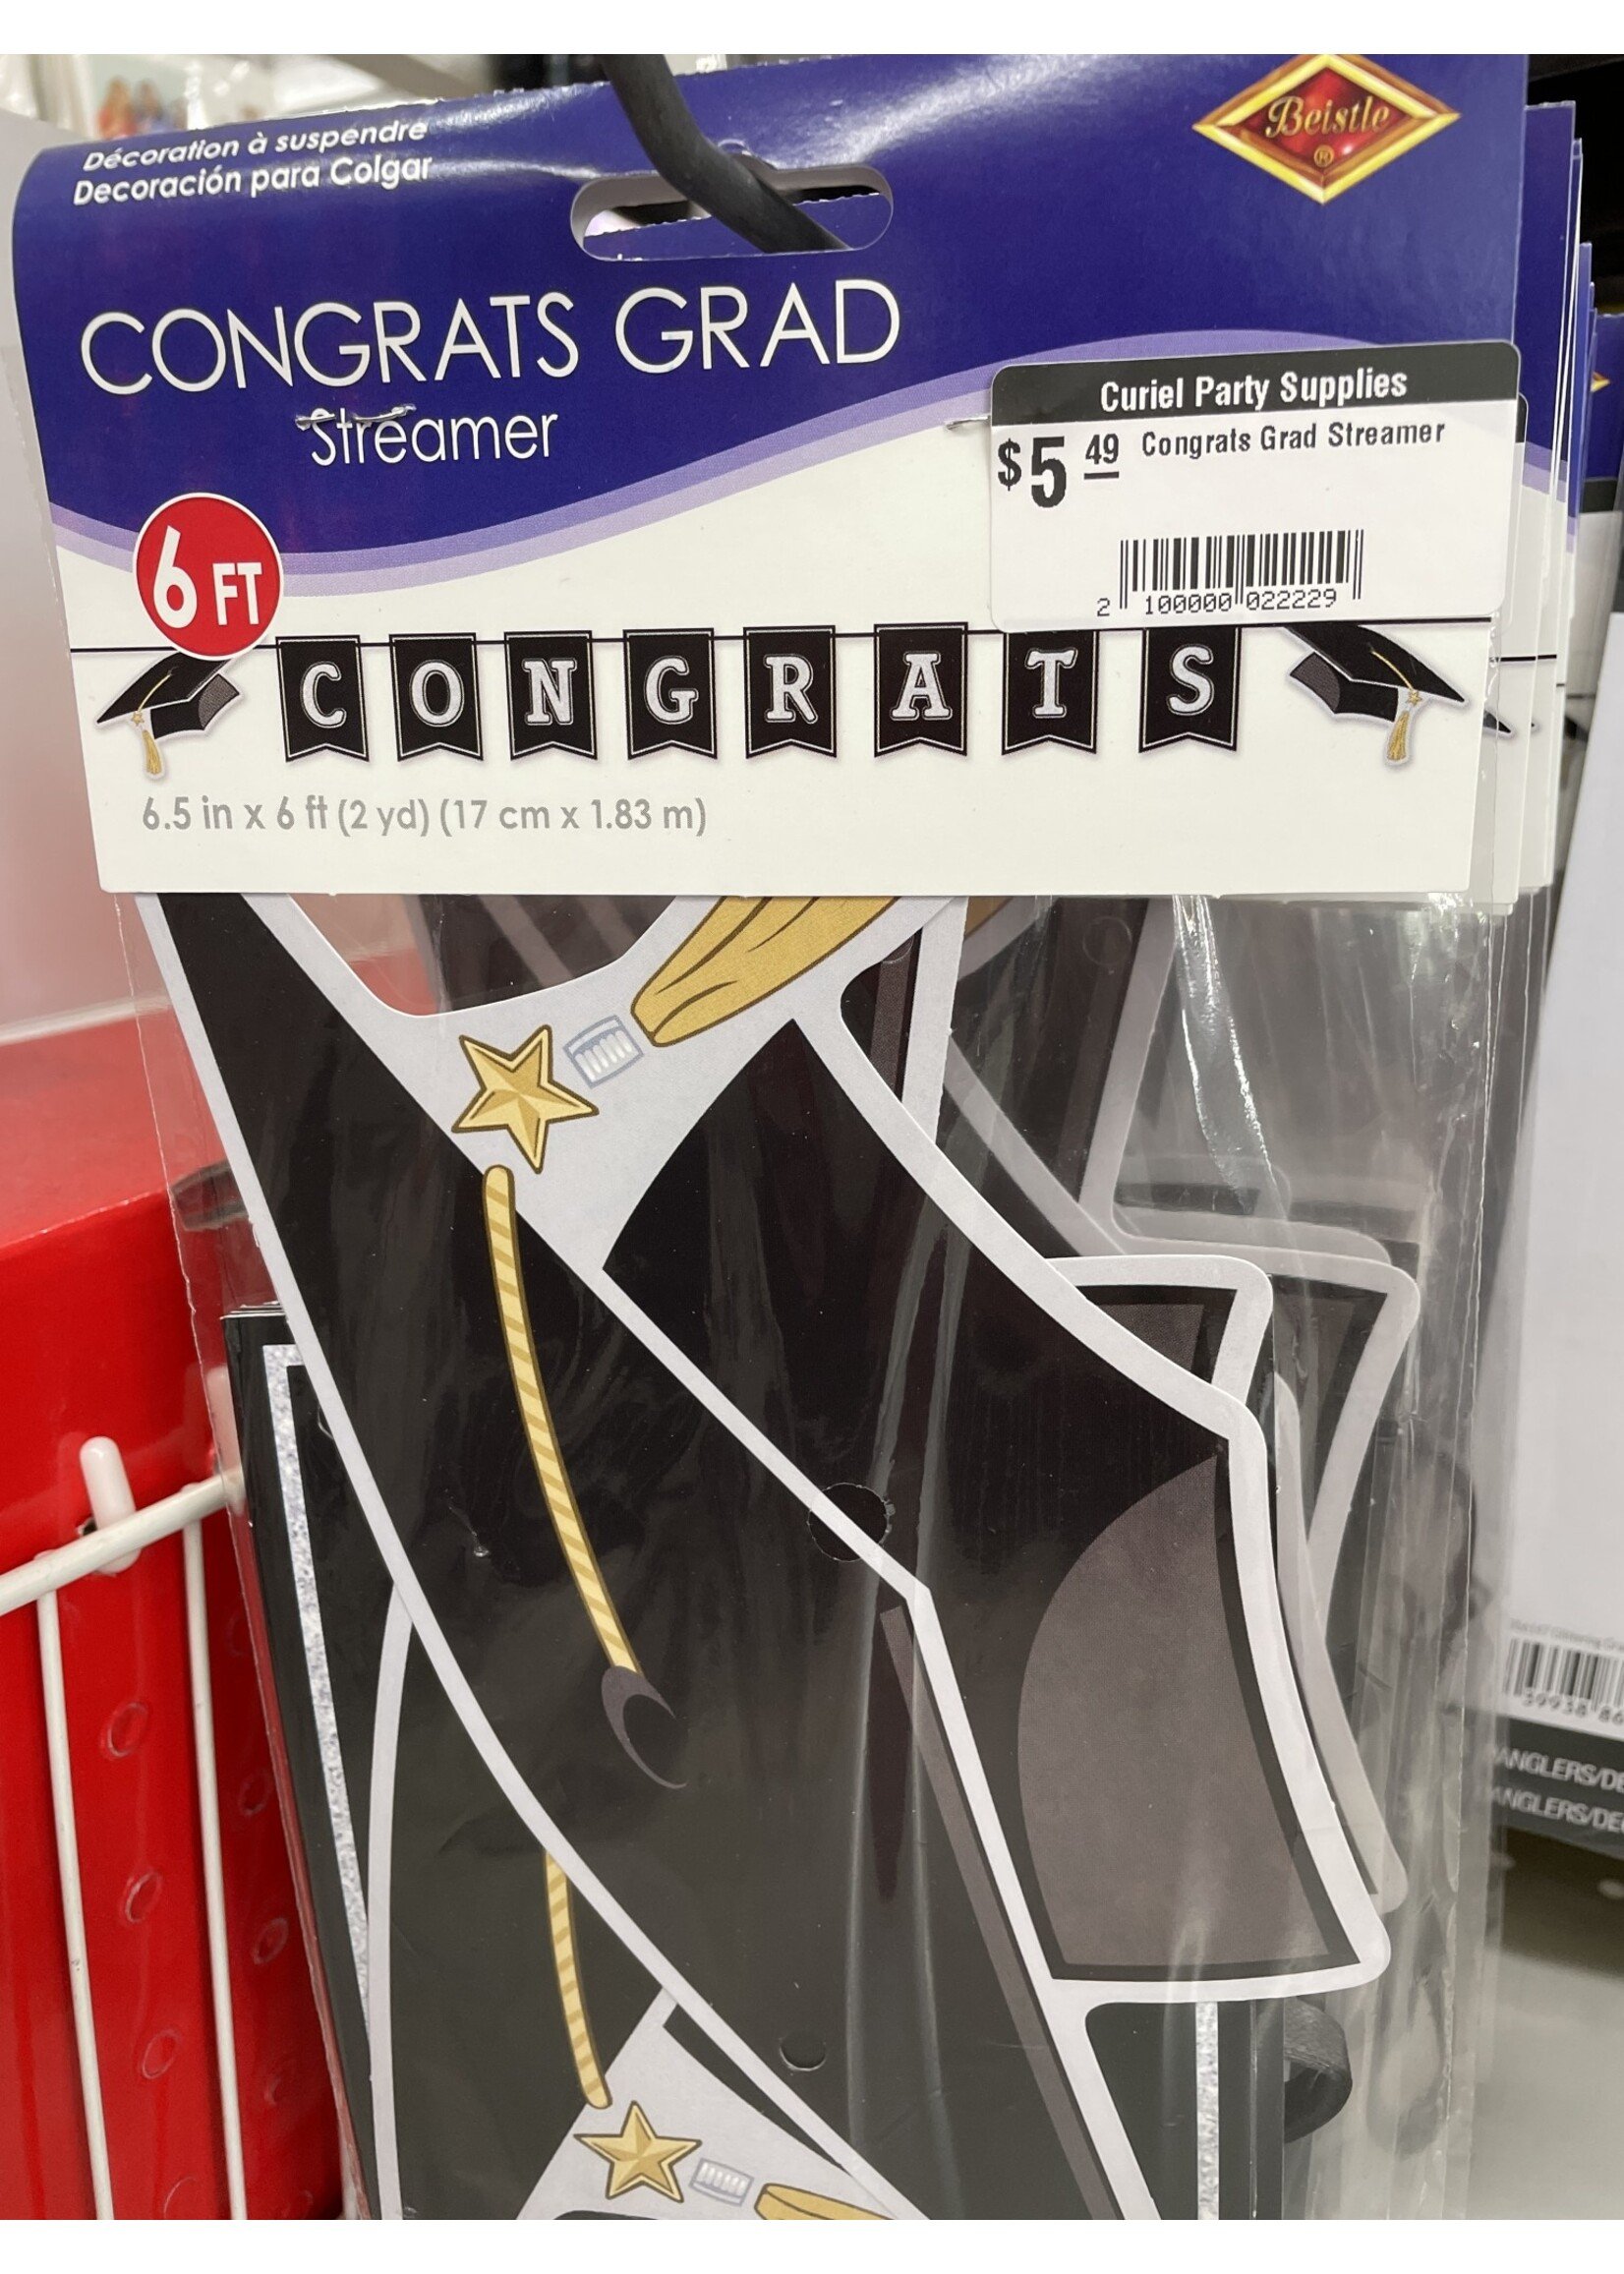 Congrats Grad Streamer